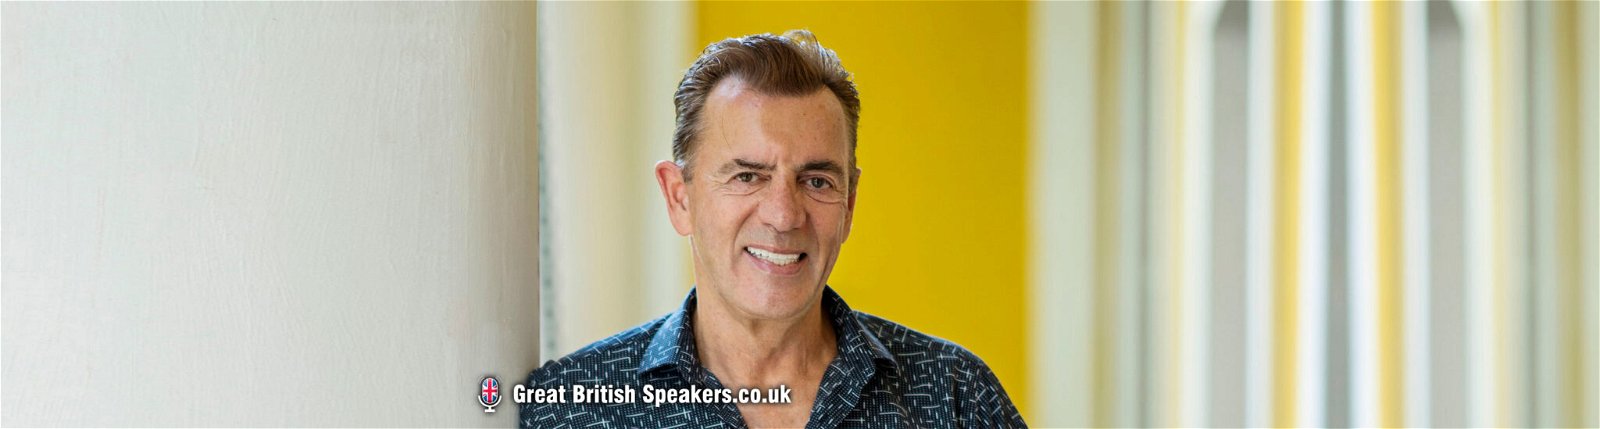 Duncan Bannatyne Top 20 Great British Speakers for Global Entrepreneur and Enterprise Week